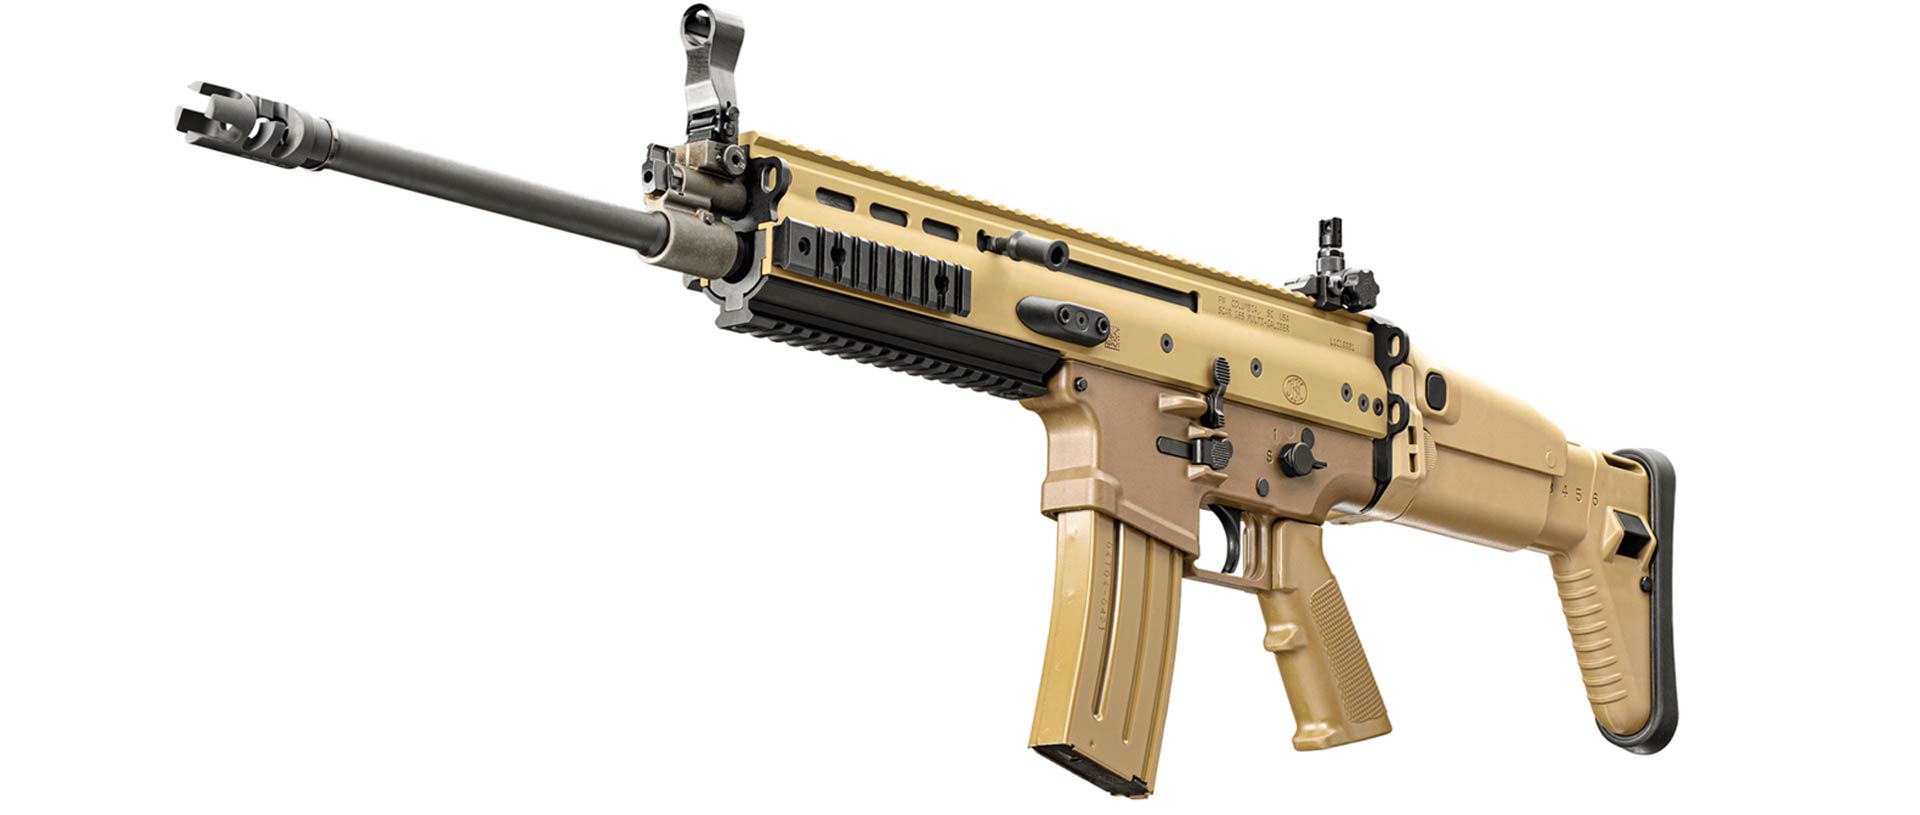 FN SCAR 16S NRCH left side view rifle carbine gun